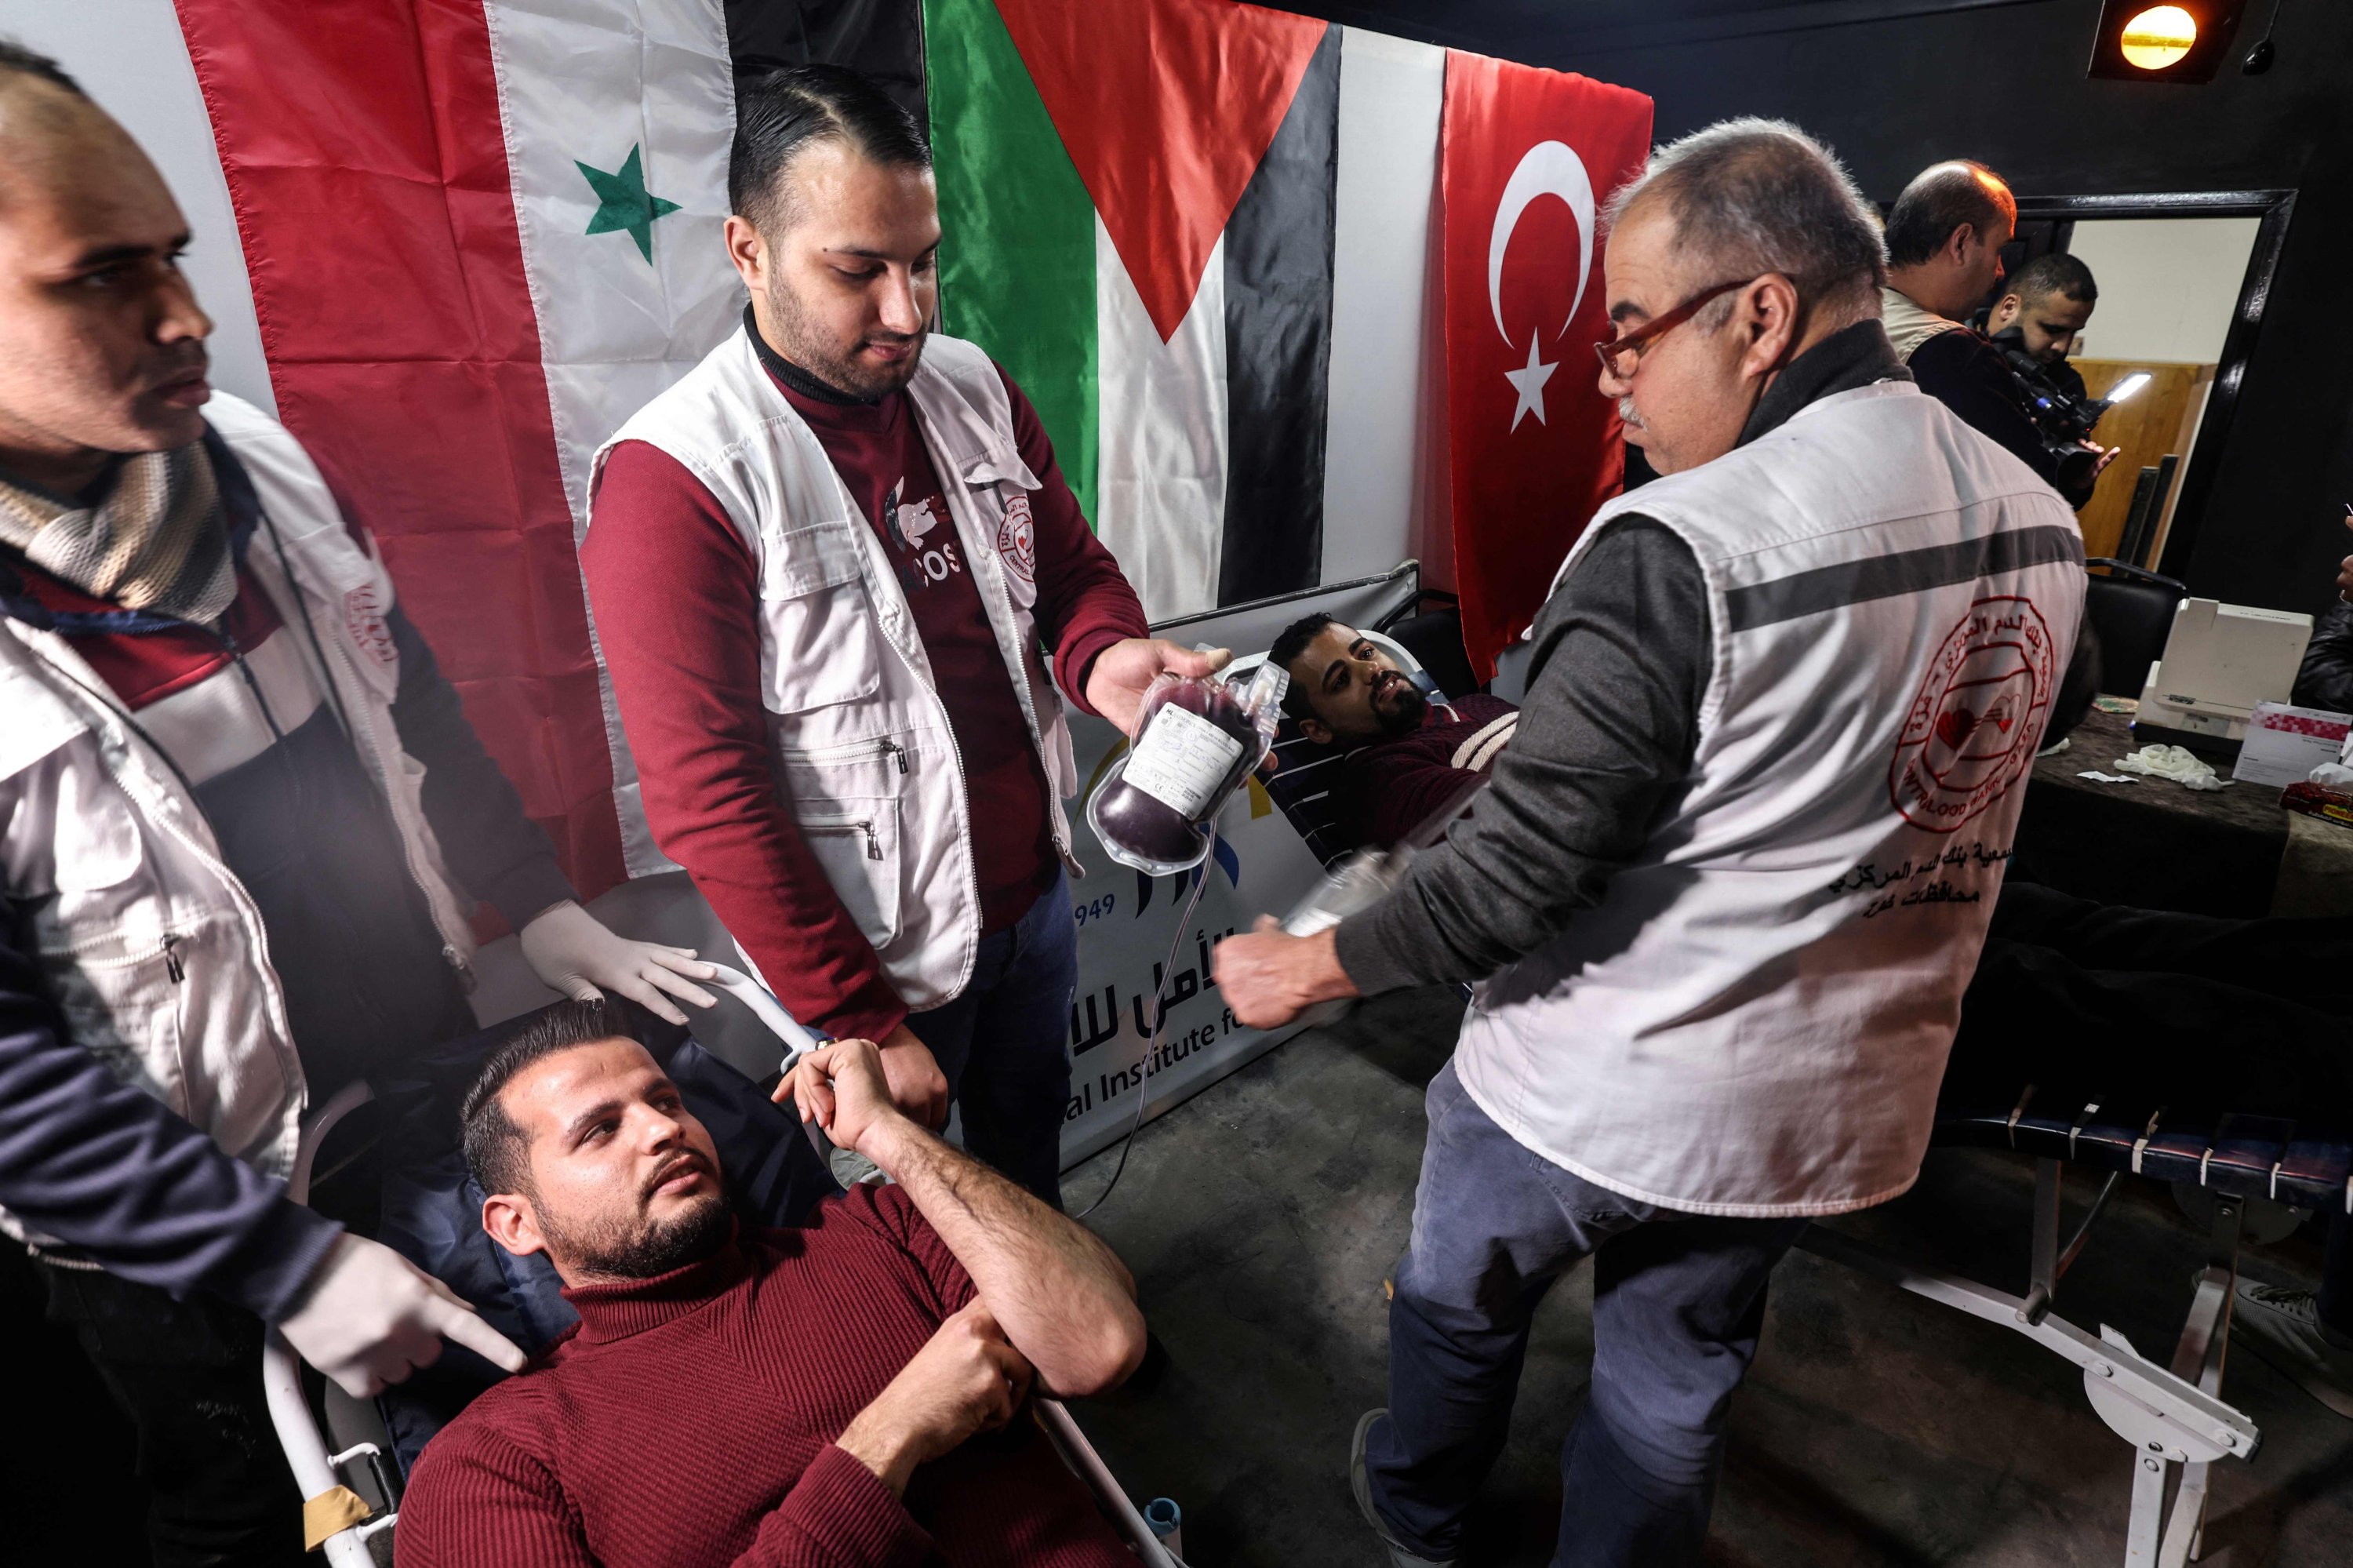 Warga Palestina menyumbangkan darah untuk membantu mereka yang terluka dalam gempa bumi di Turki dan Suriah, Kota Gaza, 12 Februari 2023. (Foto AFP)